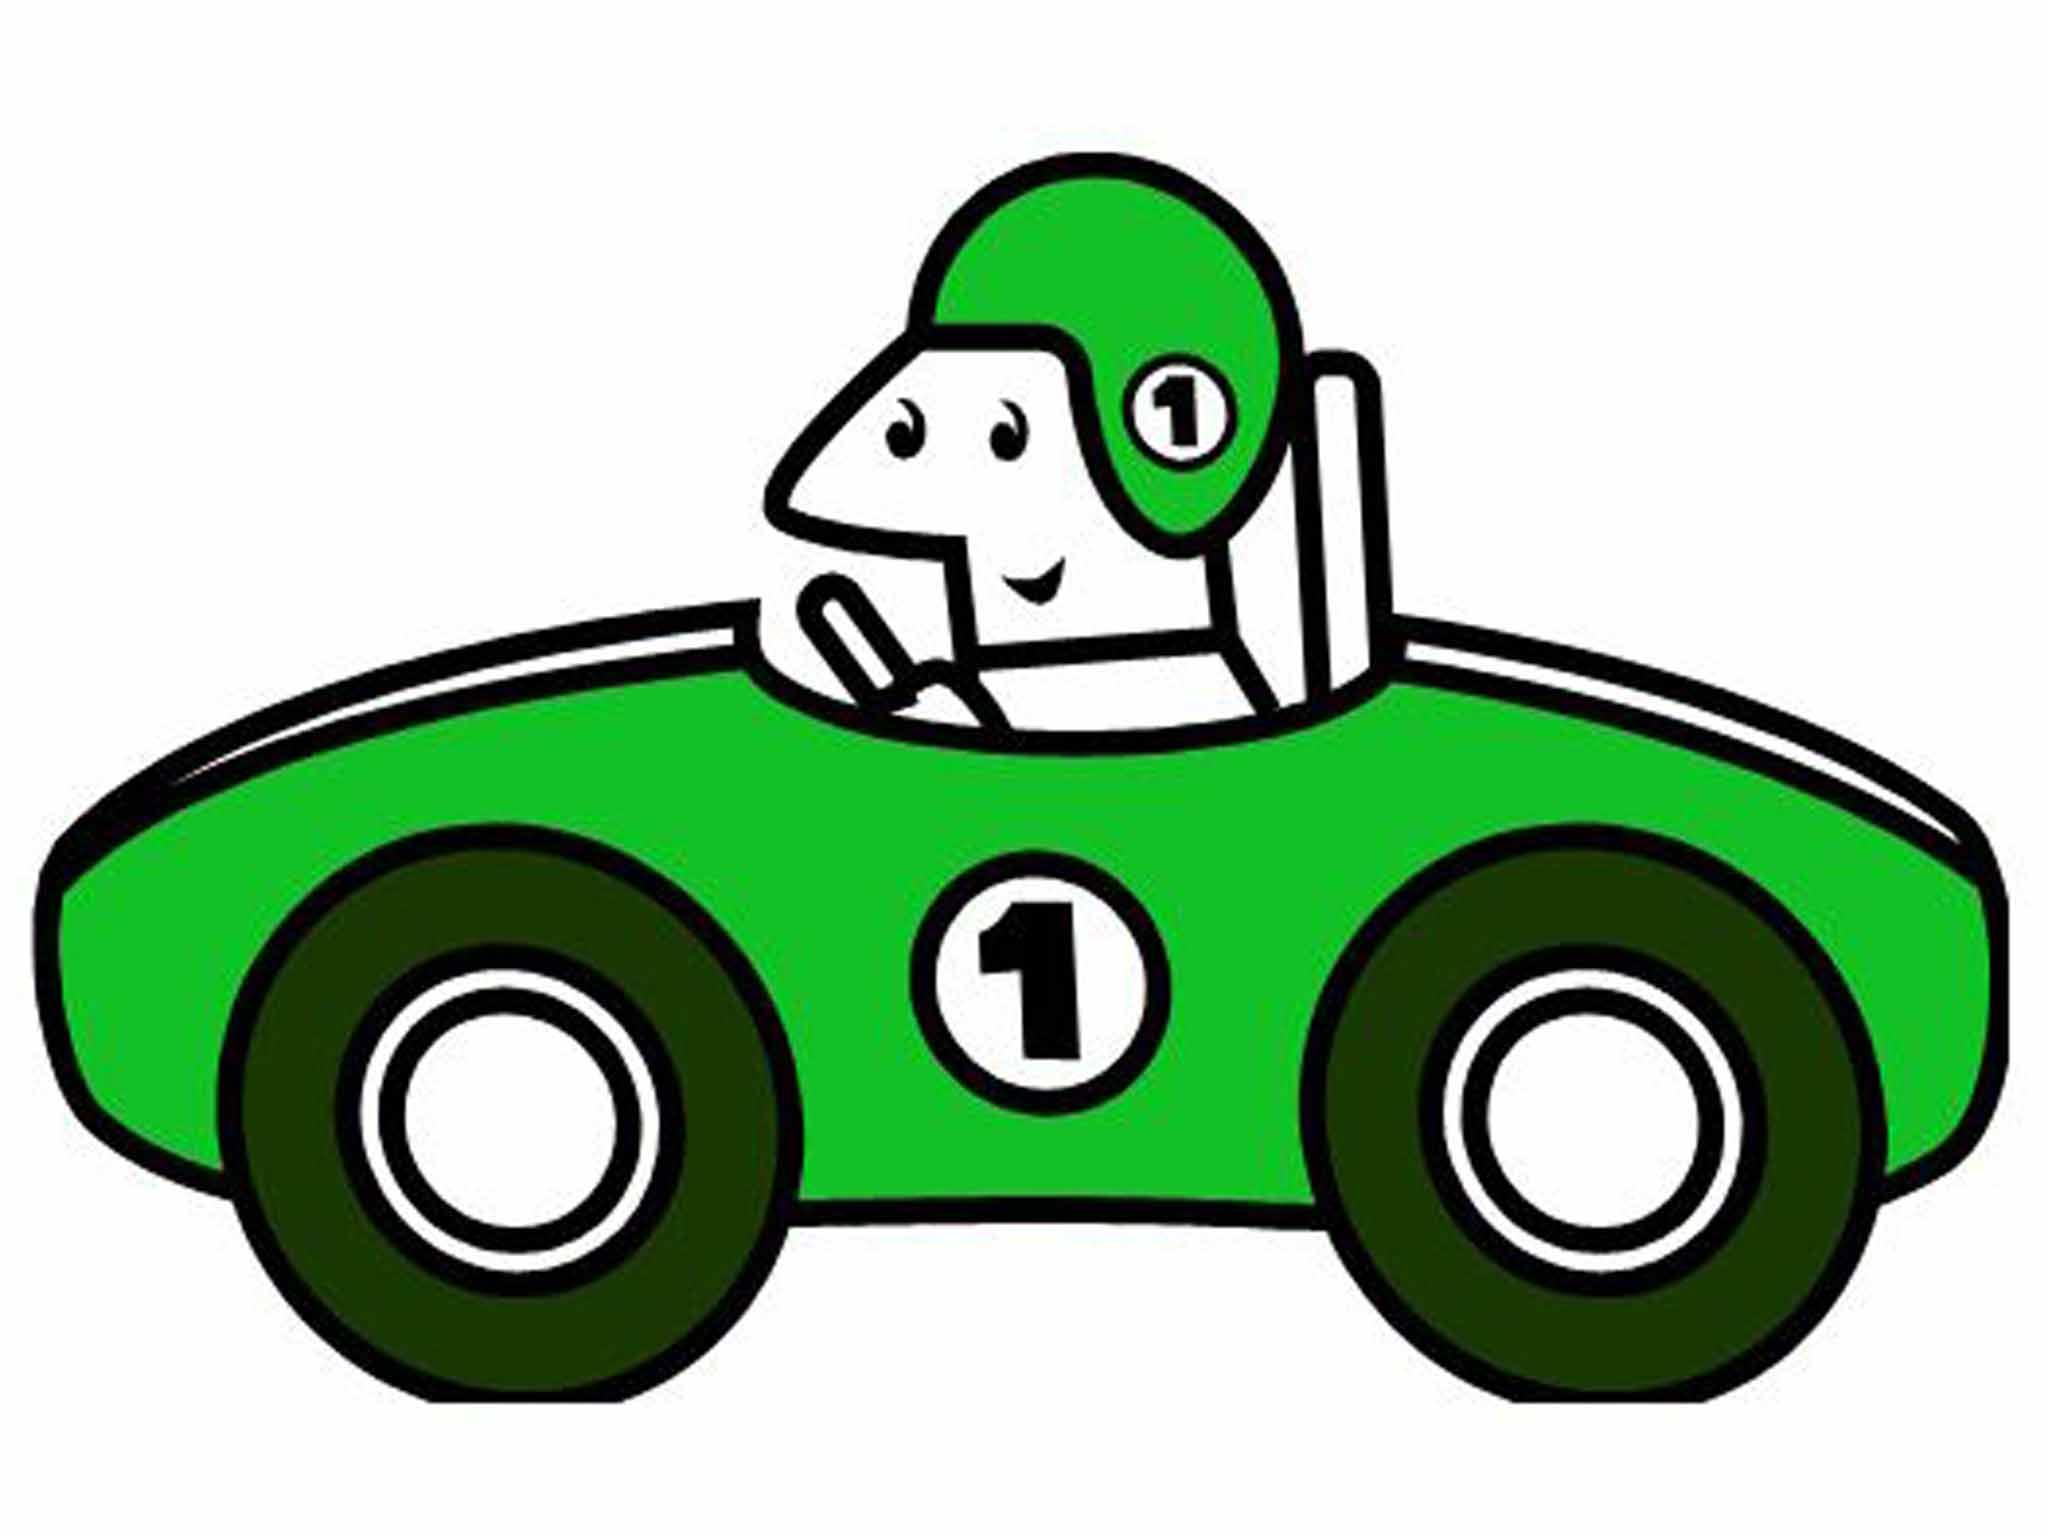 Race Car Green Racing Car Clip Art Clipart Pictures Image 41243